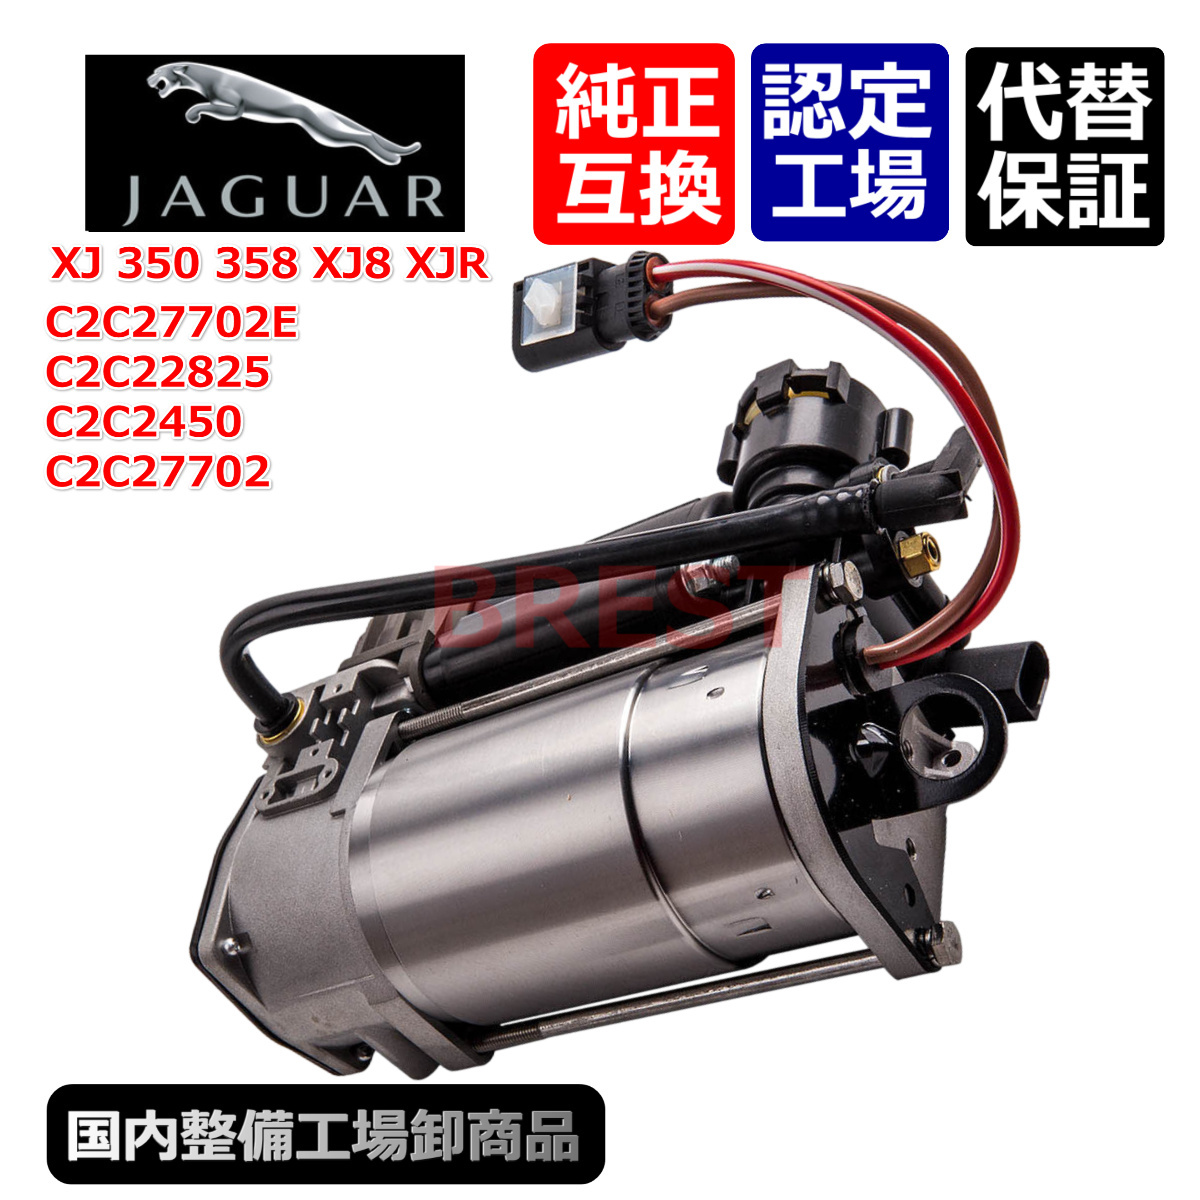  Jaguar air suspension air suspension compressor XJ X350 X358 XJ8 XJ-R relay set C2C22825